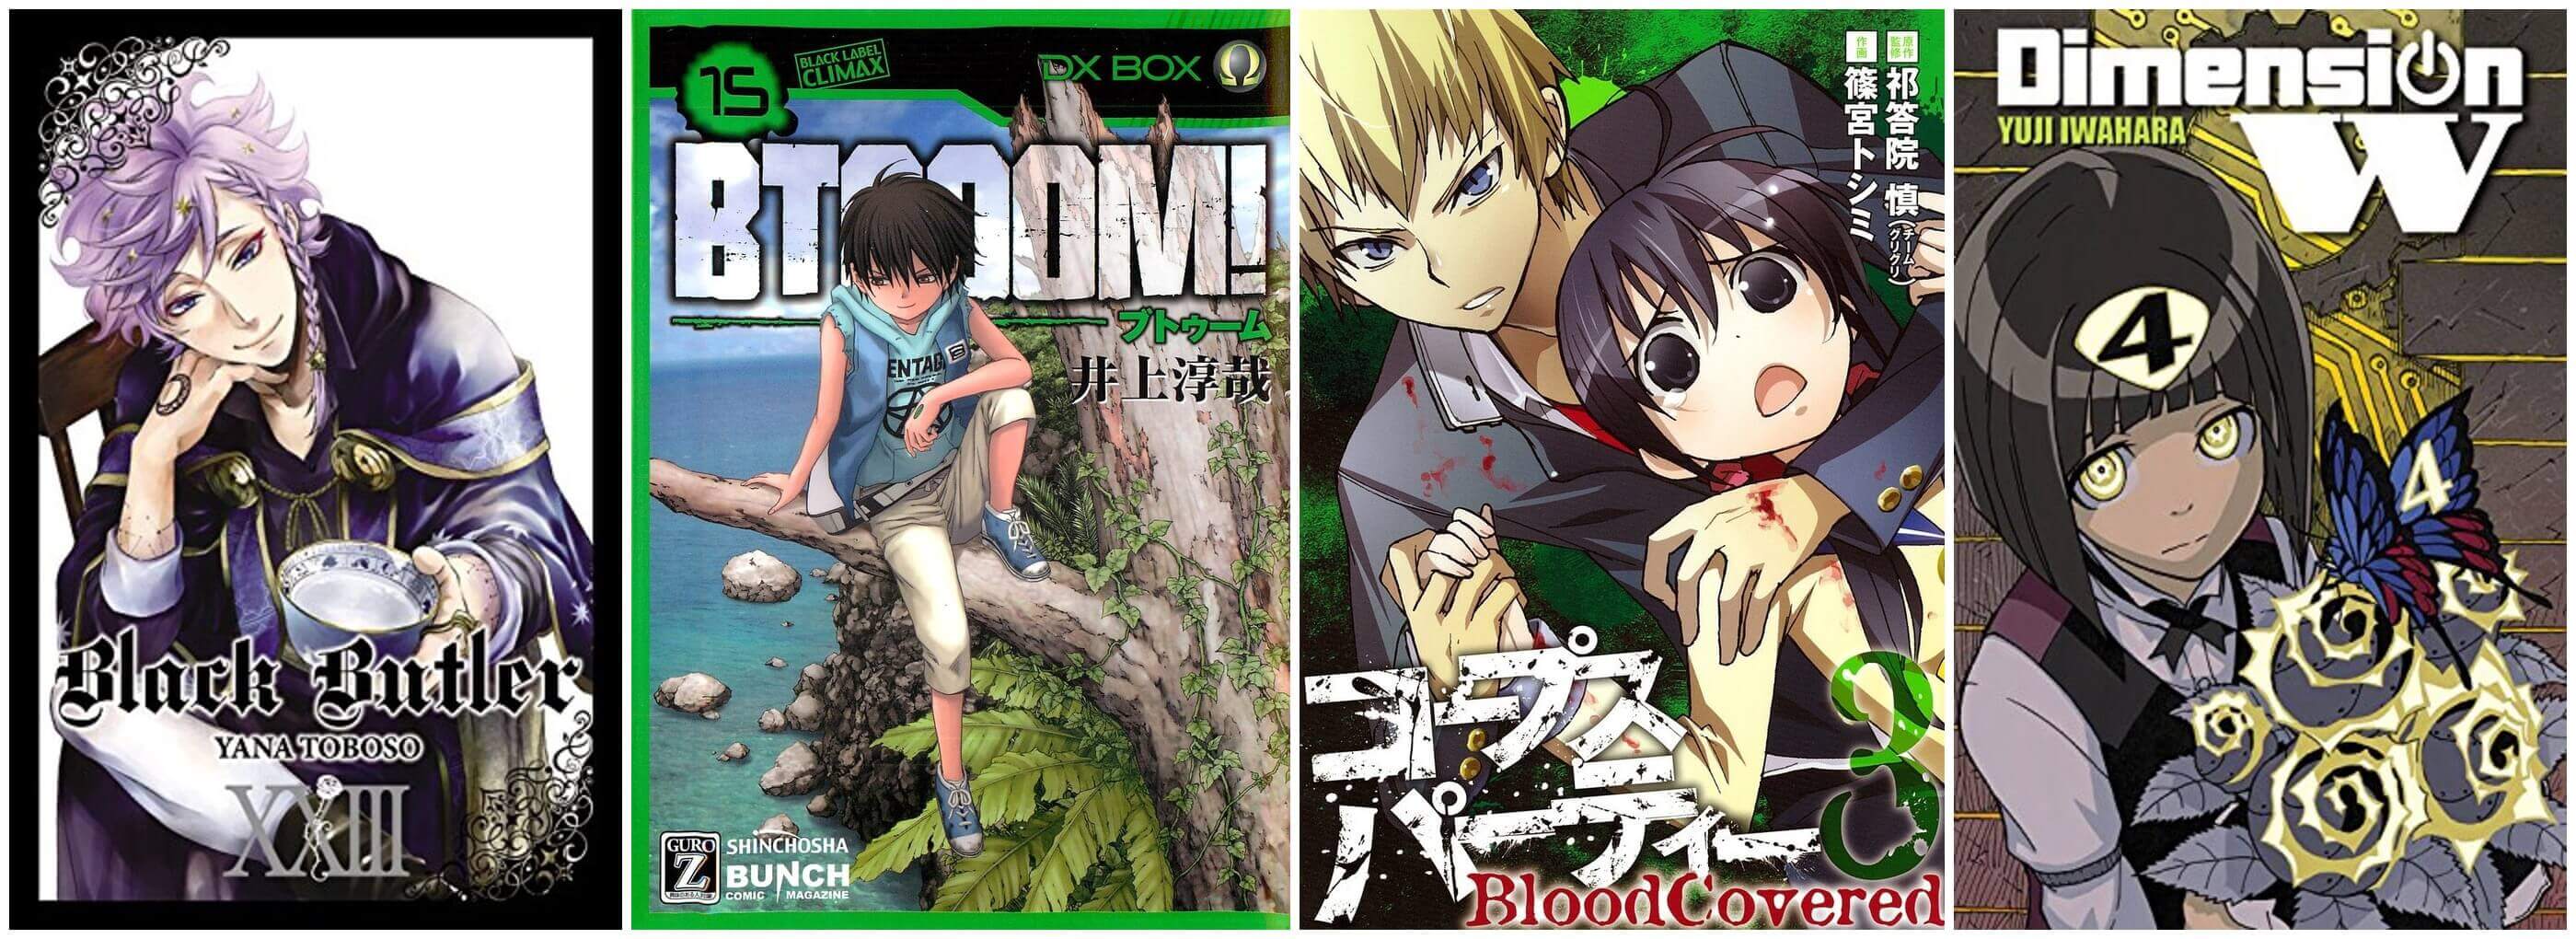 November 2016 Manga Releases